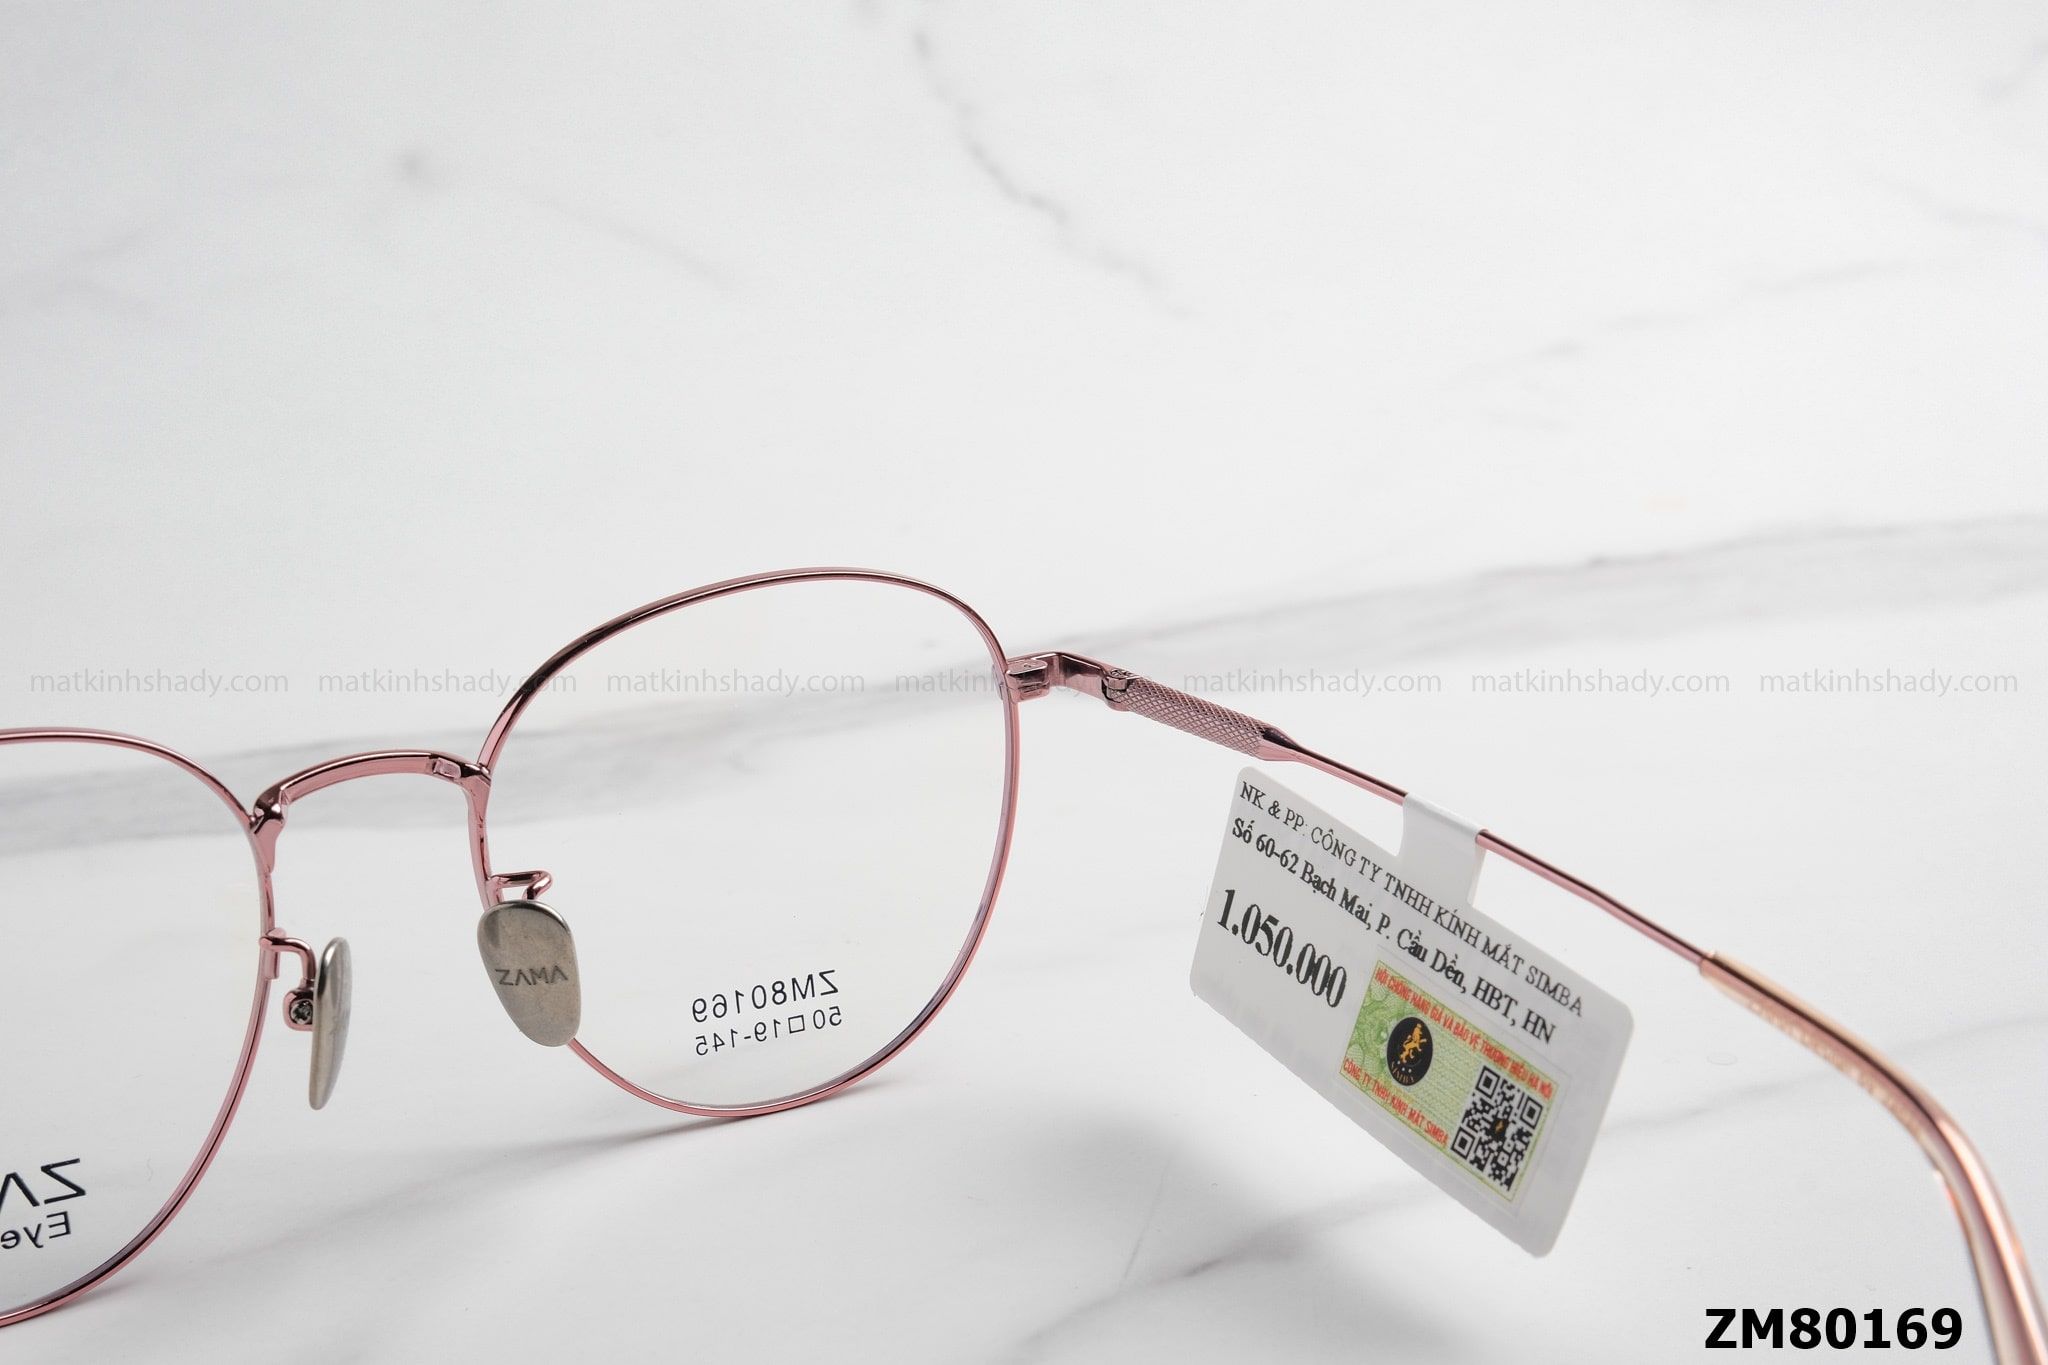  ZAMA Eyewear - Glasses - ZM80169 